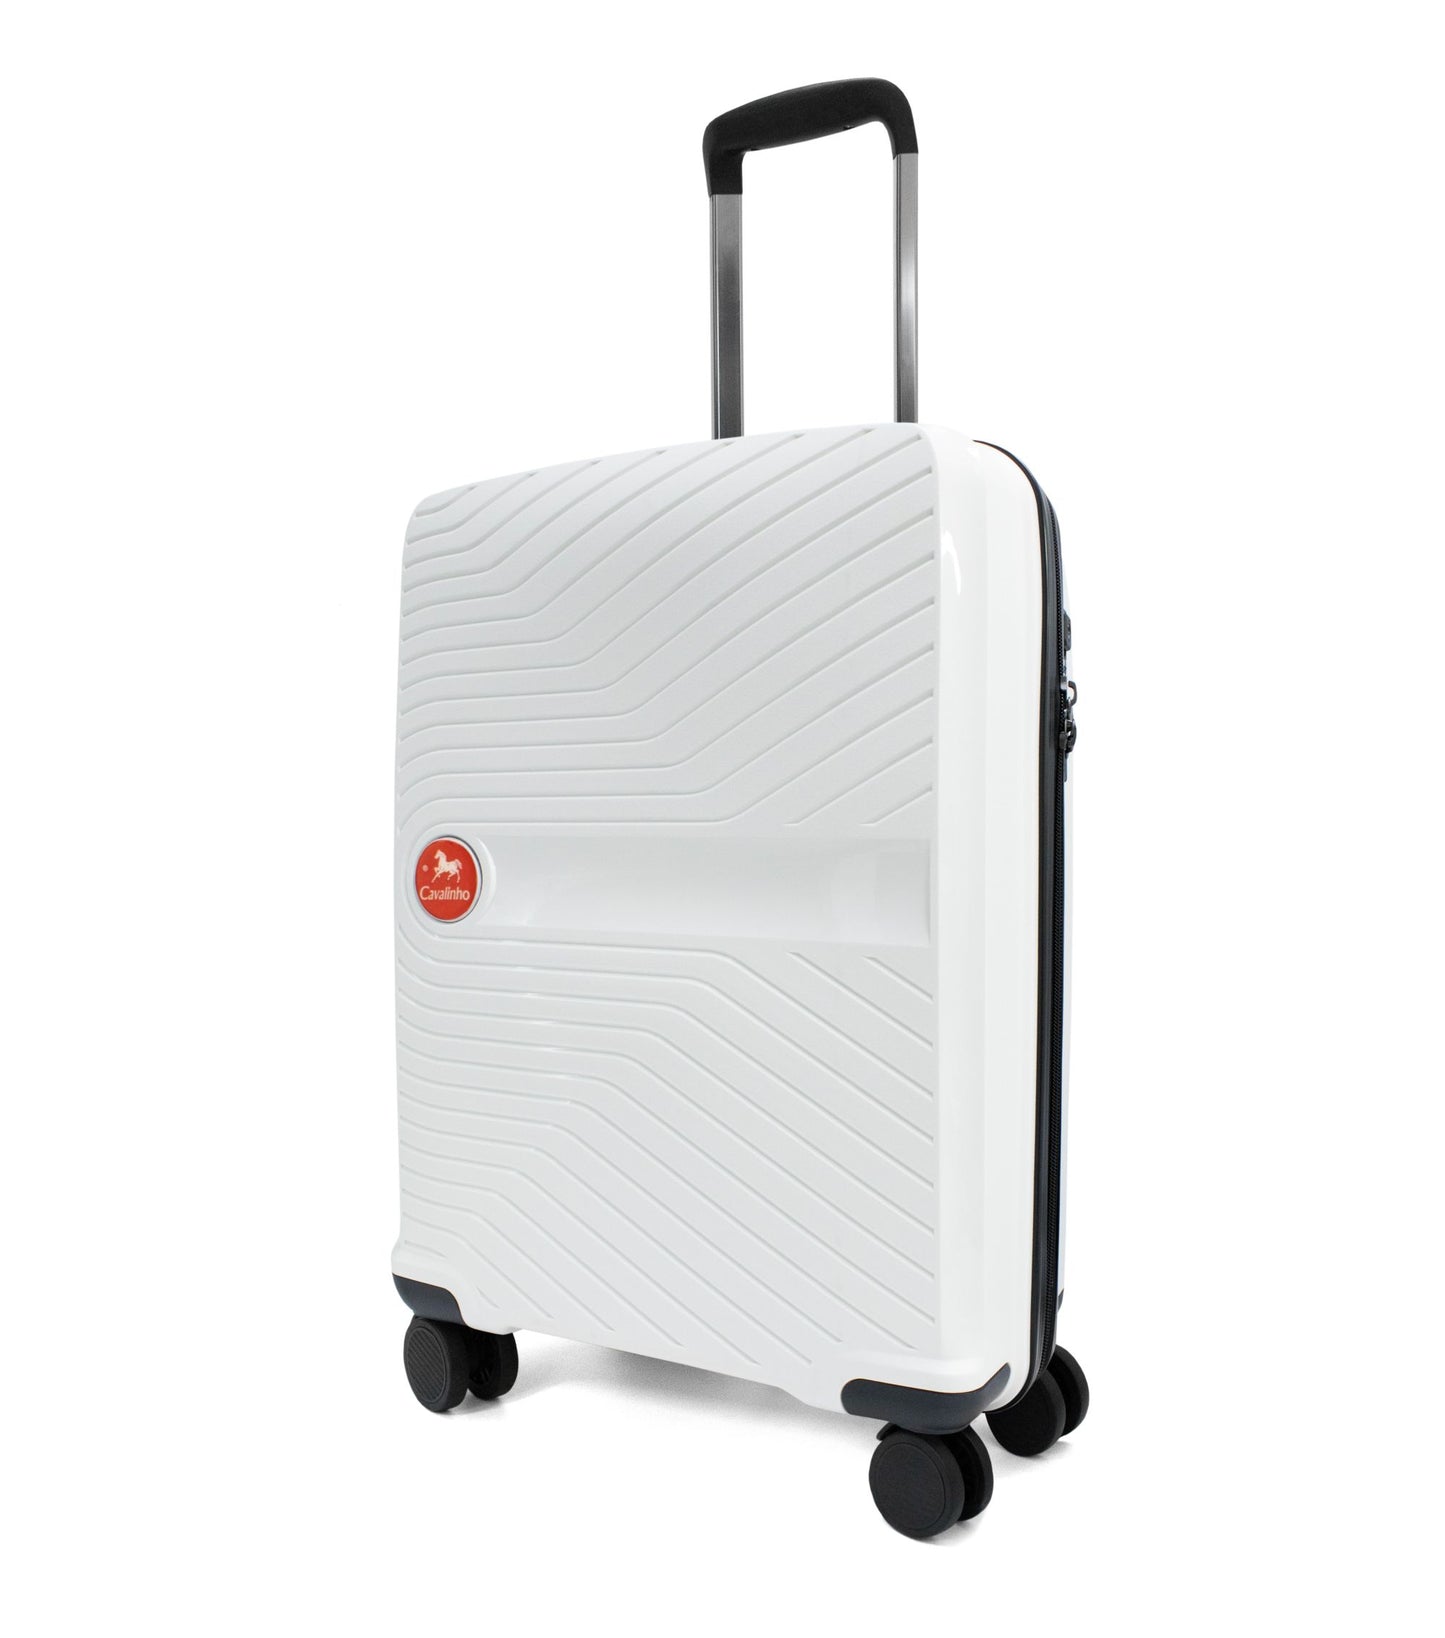 Cavalinho Colorful Carry-on Hardside Luggage (19") - 19 inch White - 68020004.06.19_2